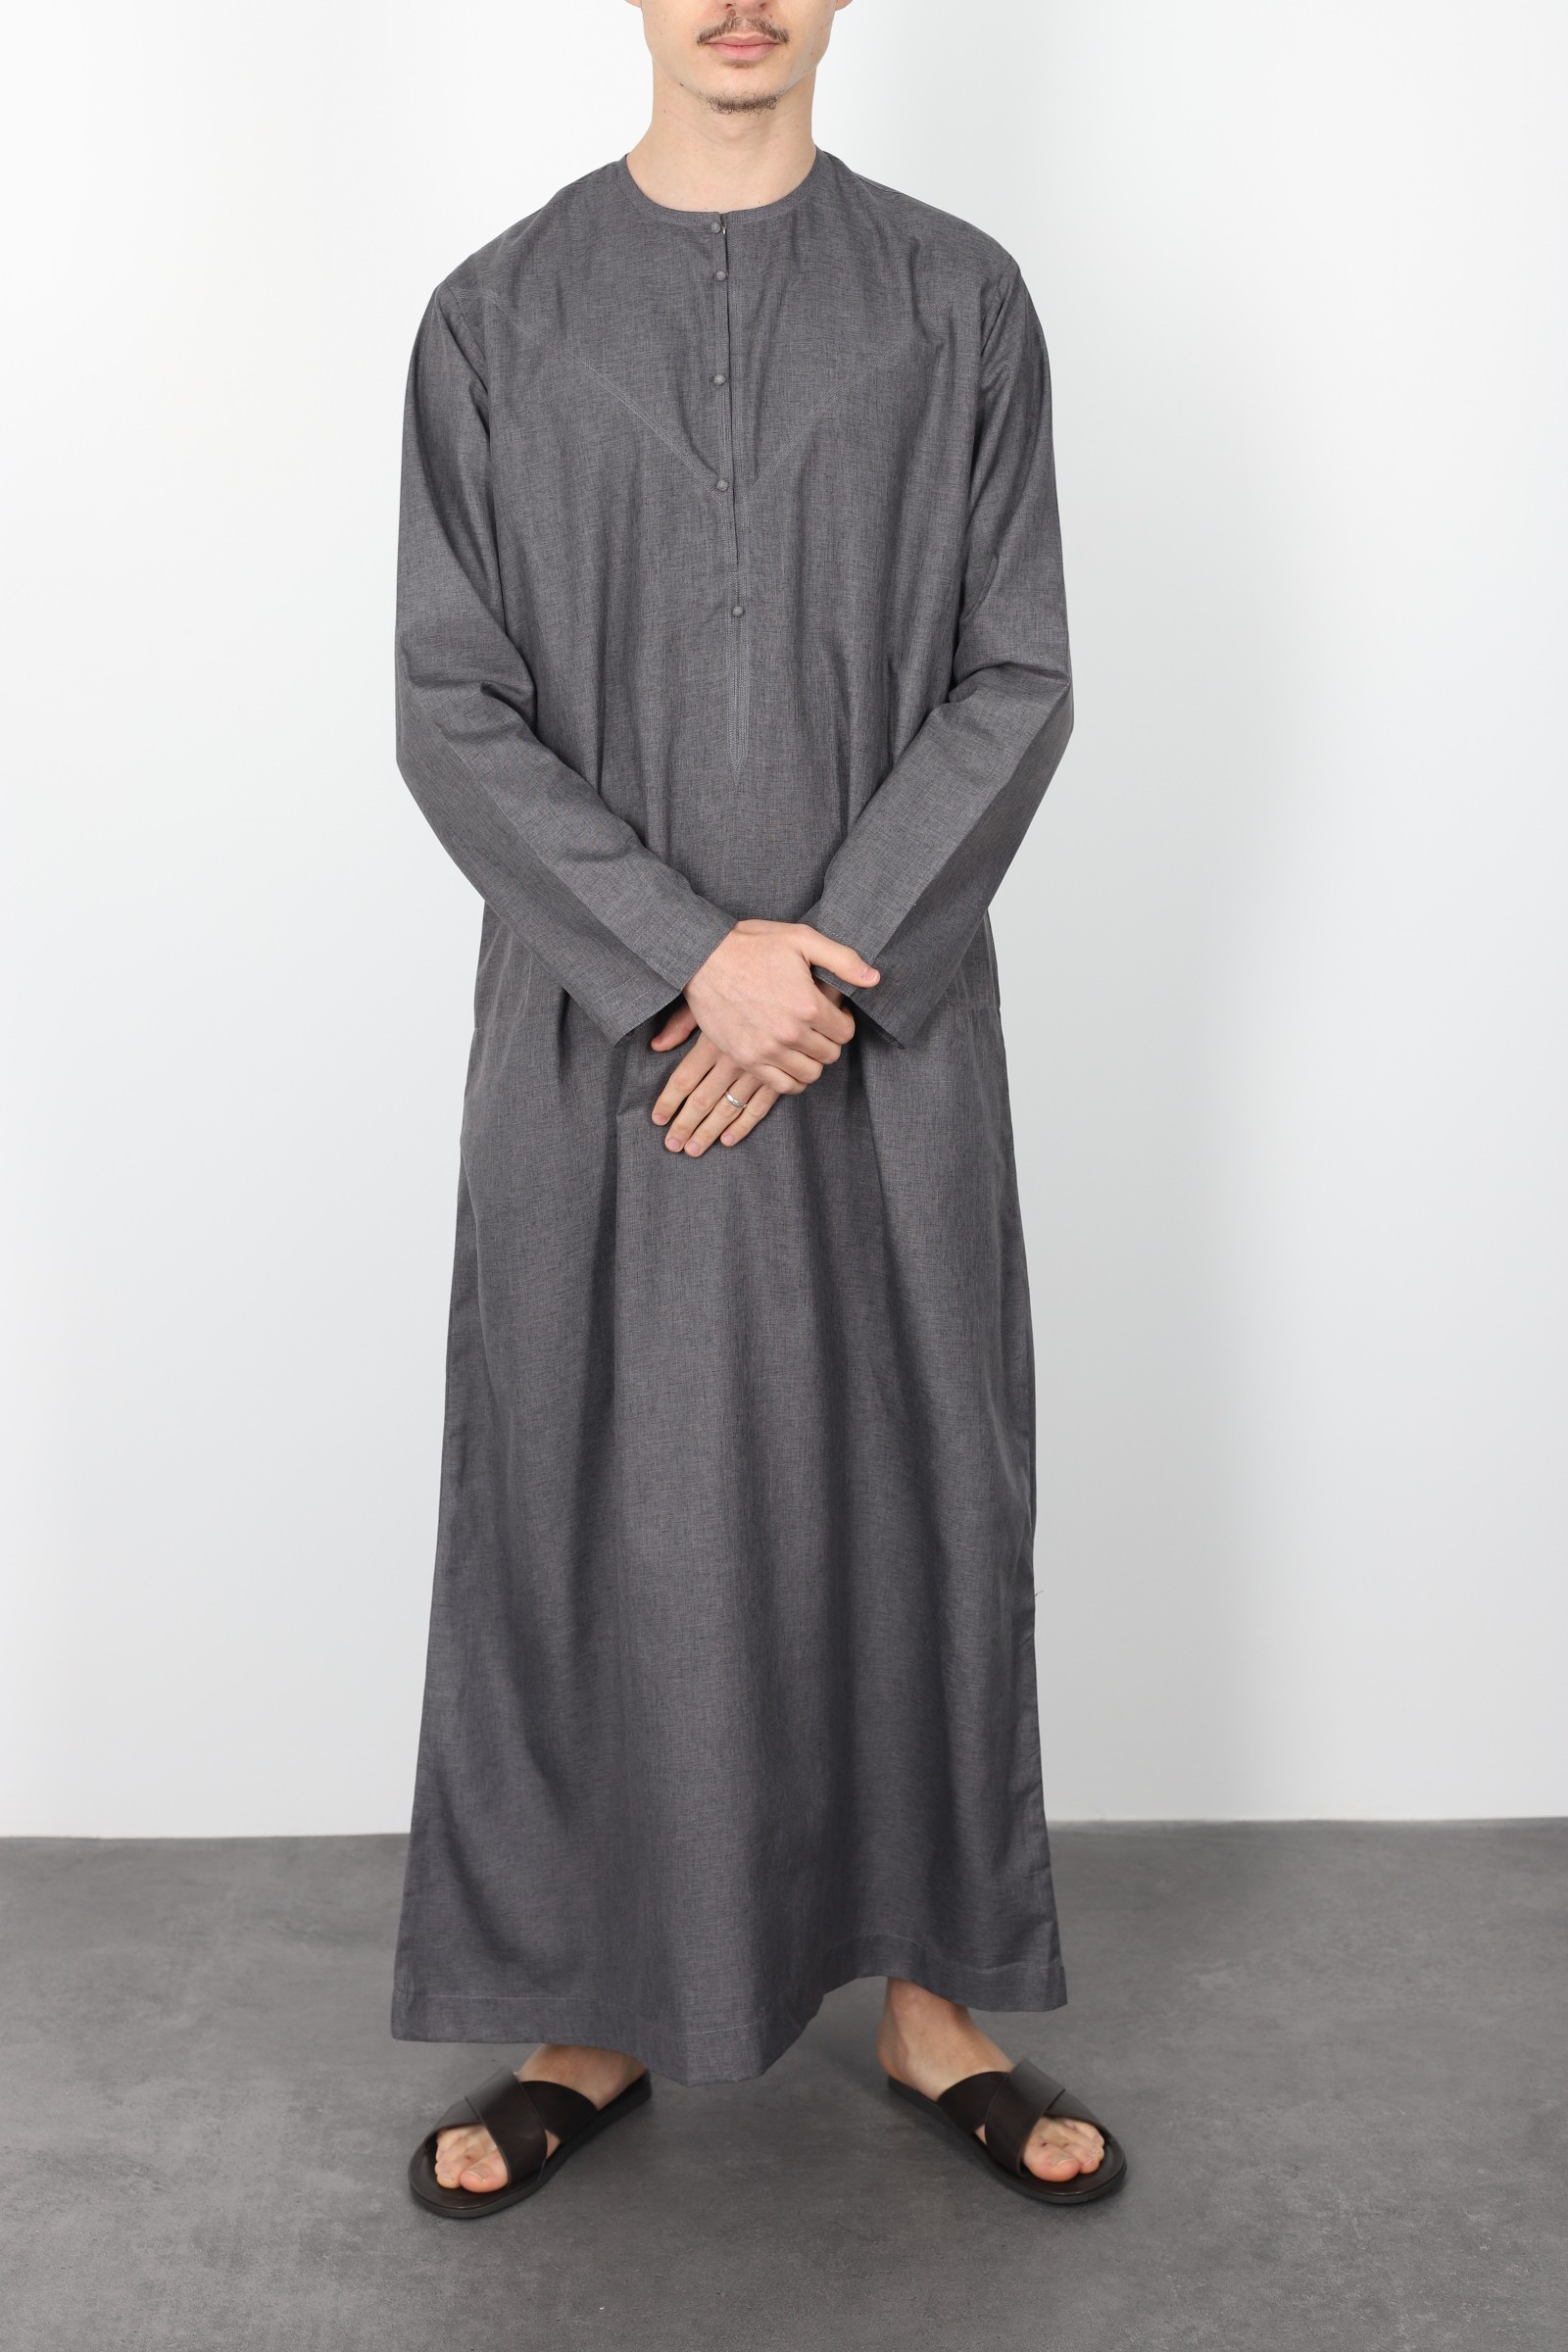 Qamis long sleeves man Muslim cheap